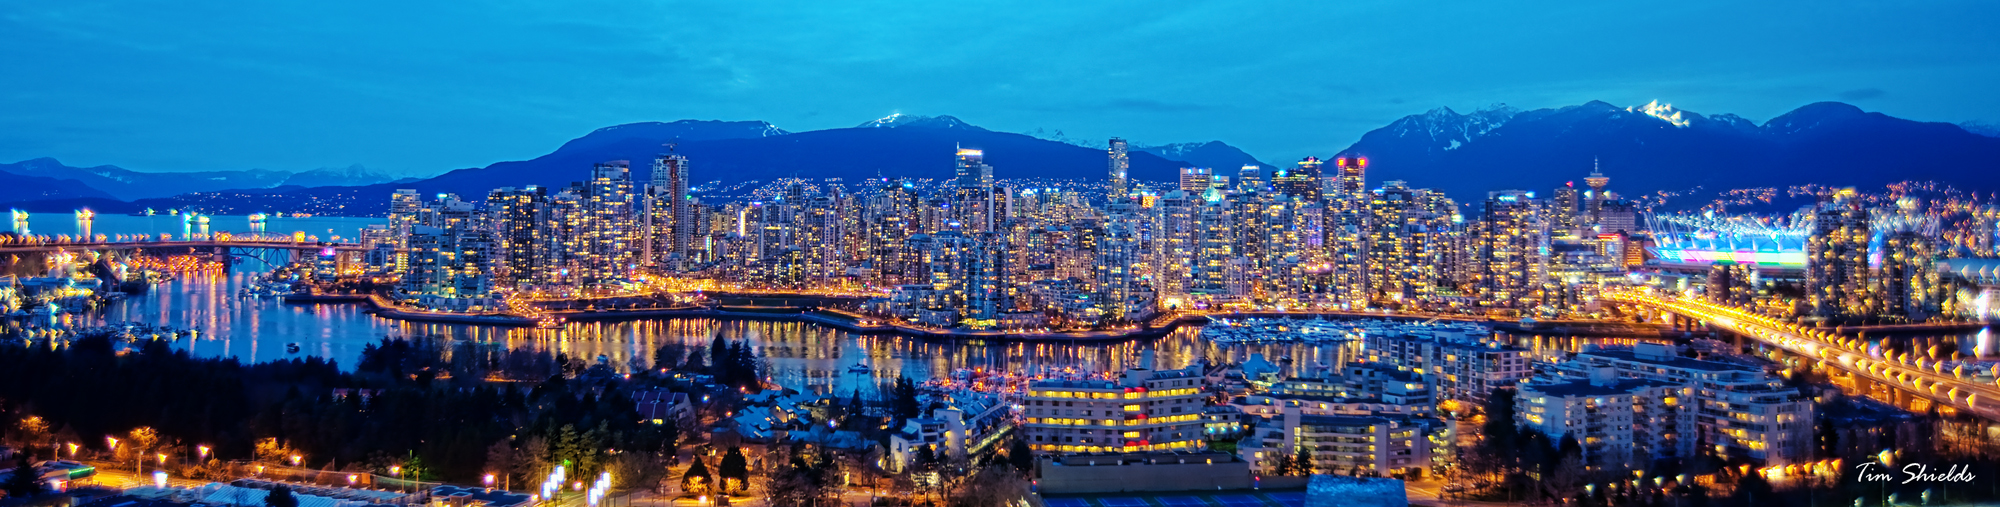 Vancouver Pano.jpg